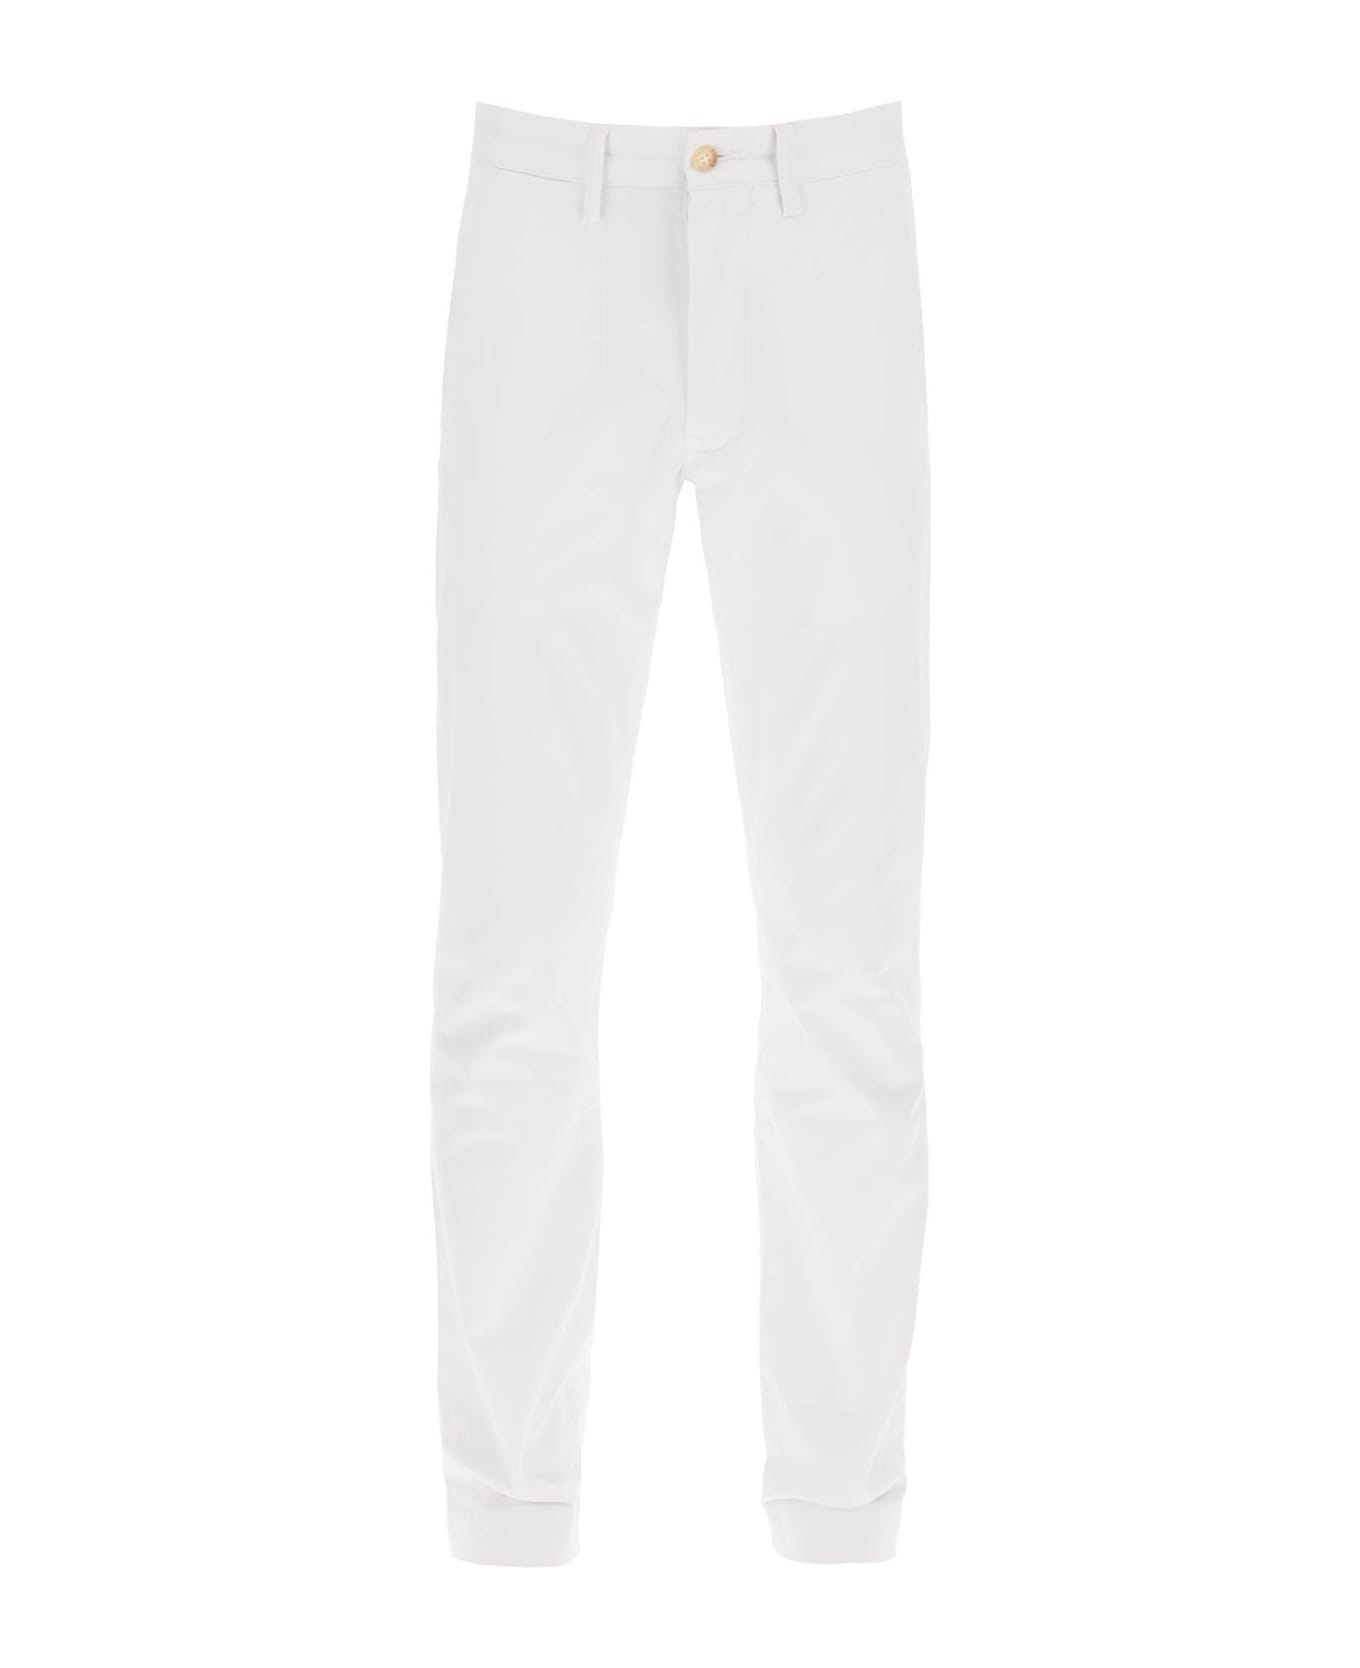 Polo Ralph Lauren Chino Pants In Cotton - DECKWASH WHITE (White)